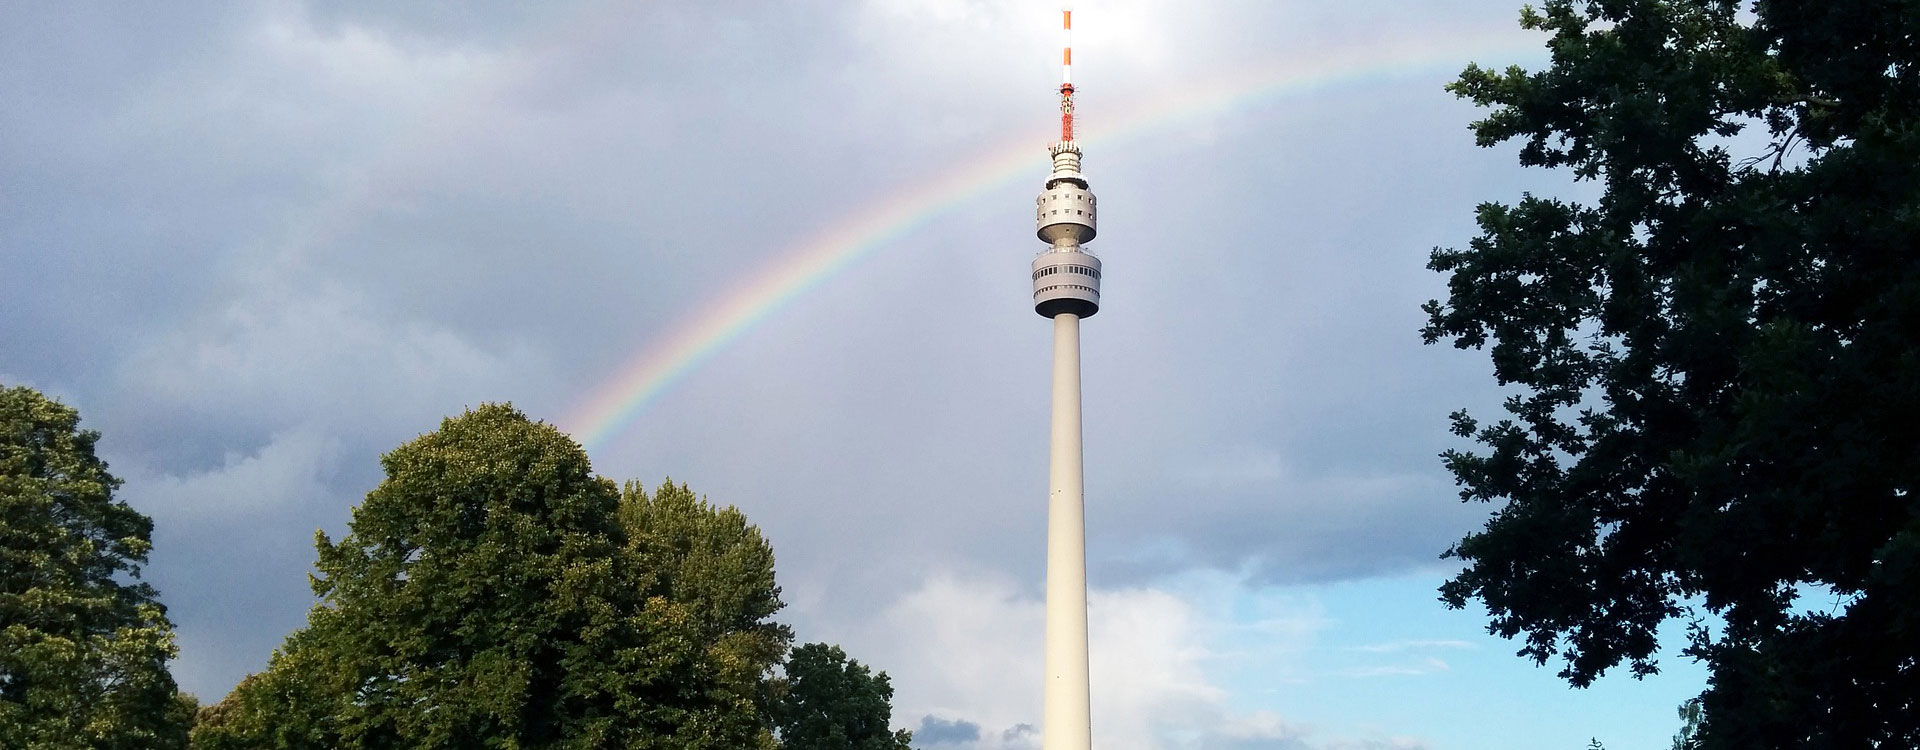 Image Dortmund Florian Tower